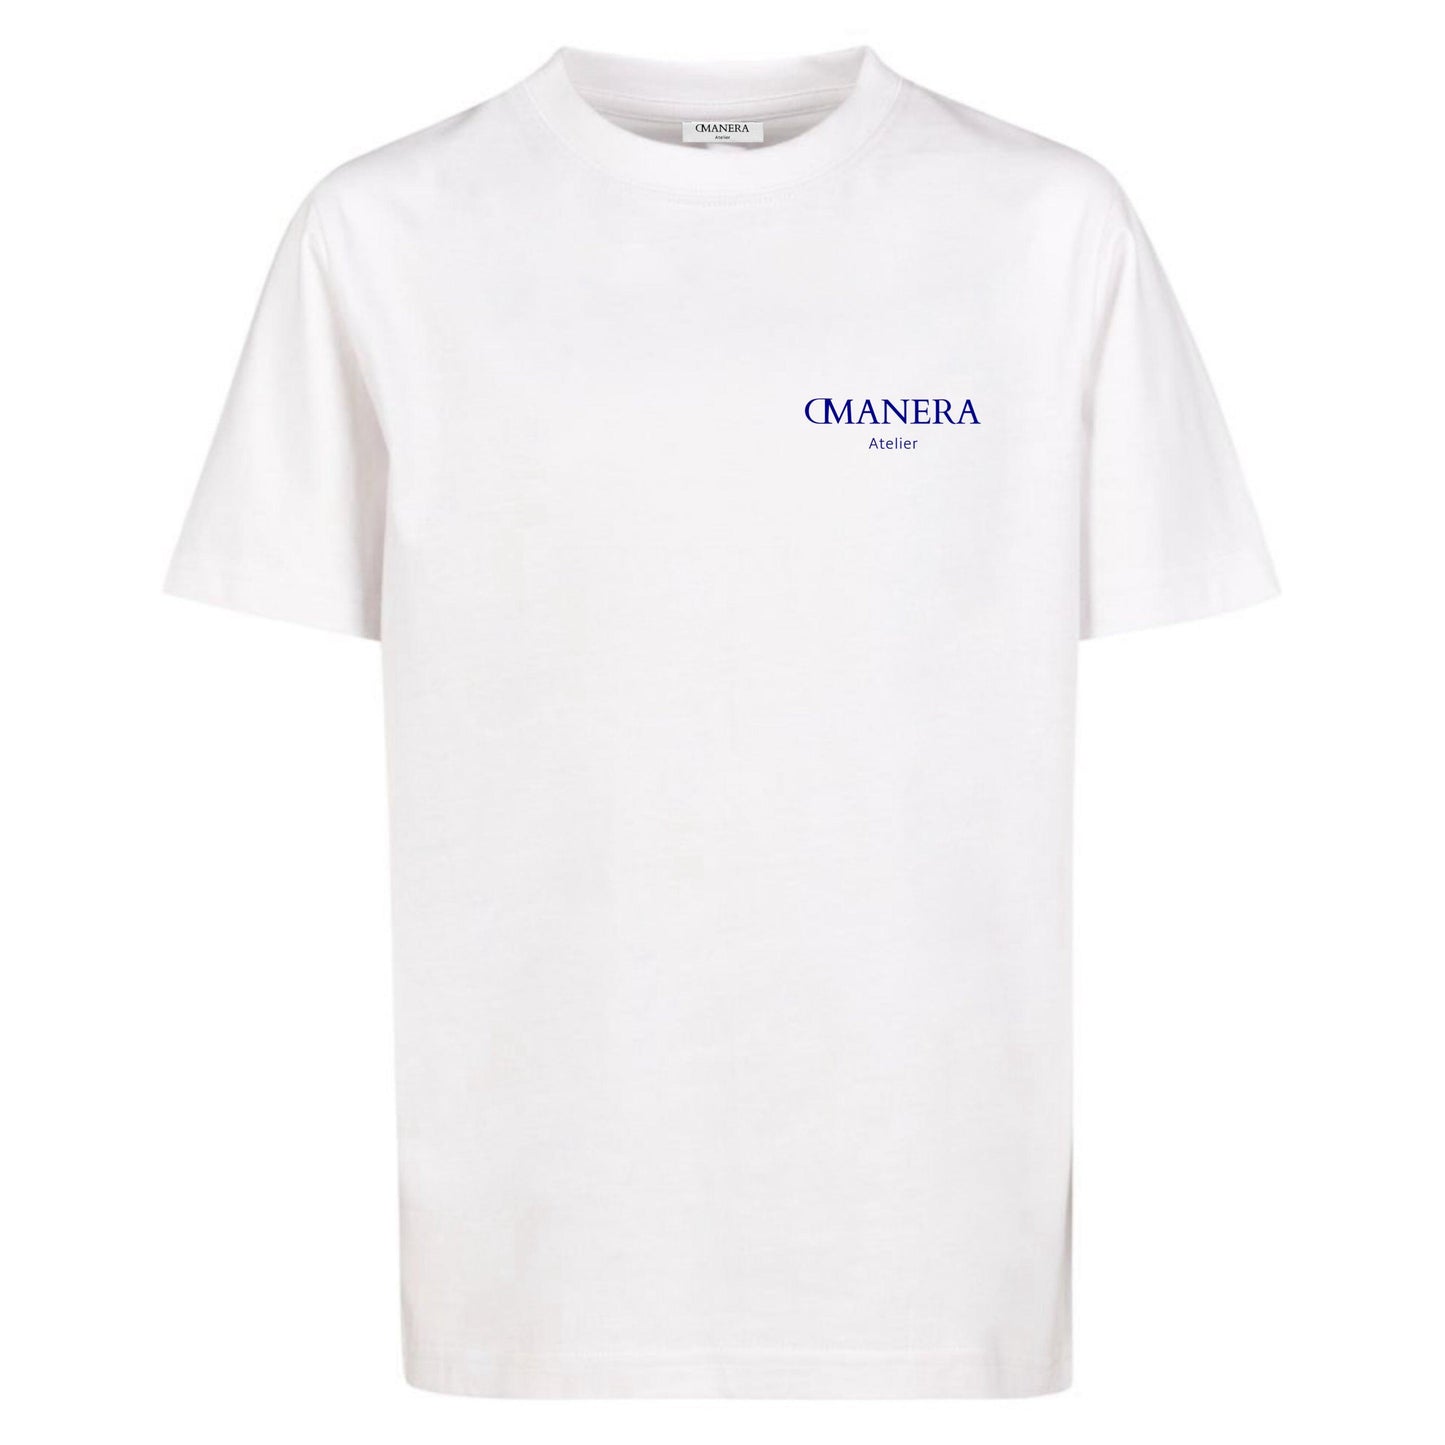 Oversize Shirt White/Navy 240 g/m² - DMANERA Atelier